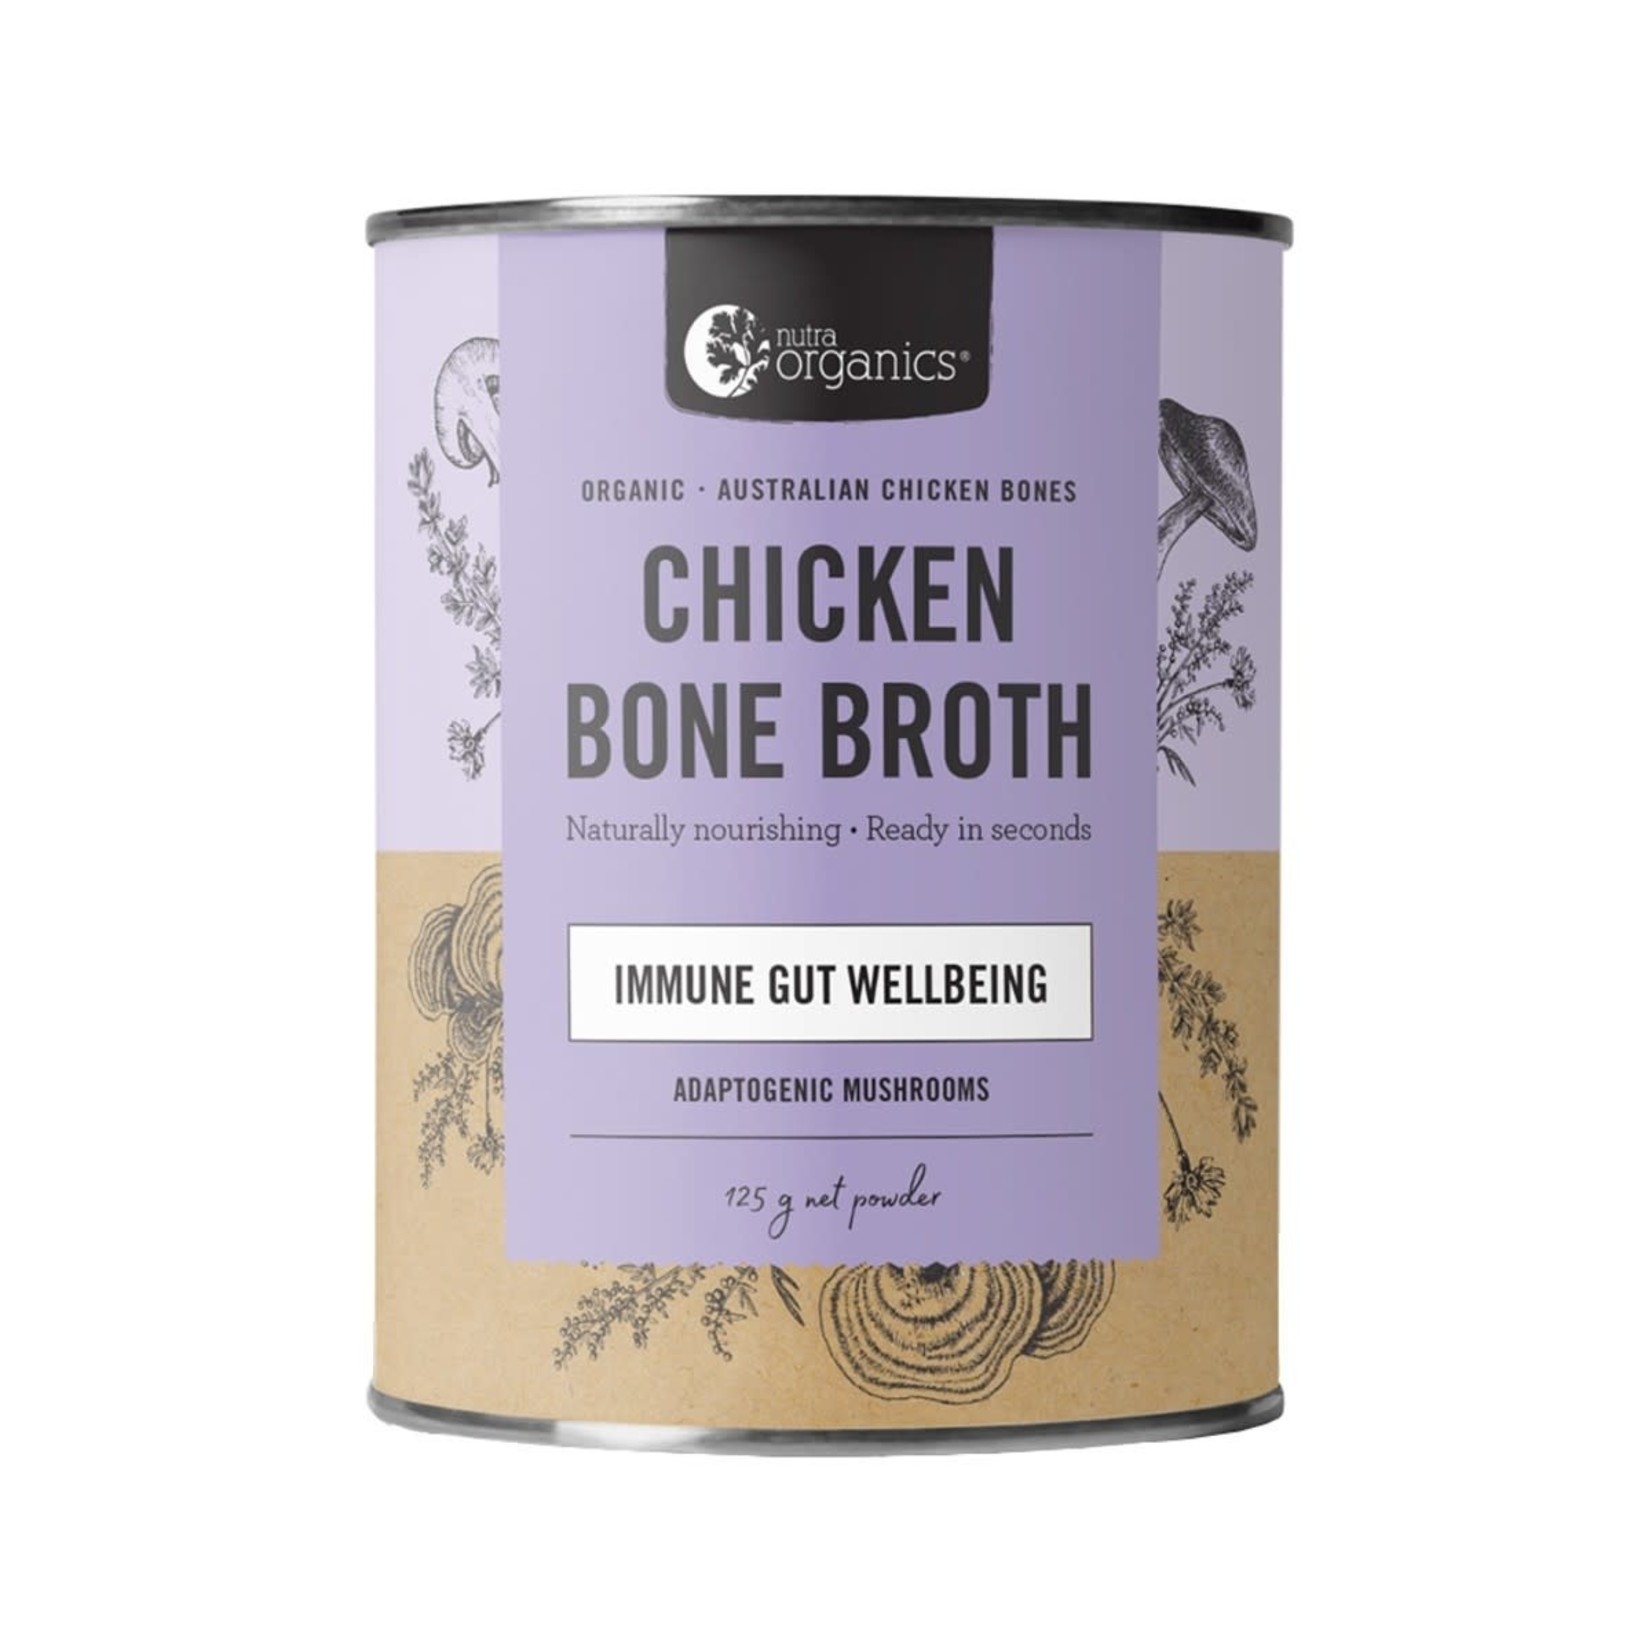 Nutra Organics Nutra organics bone broth chicken organic adaptogenic mushroom 125gm